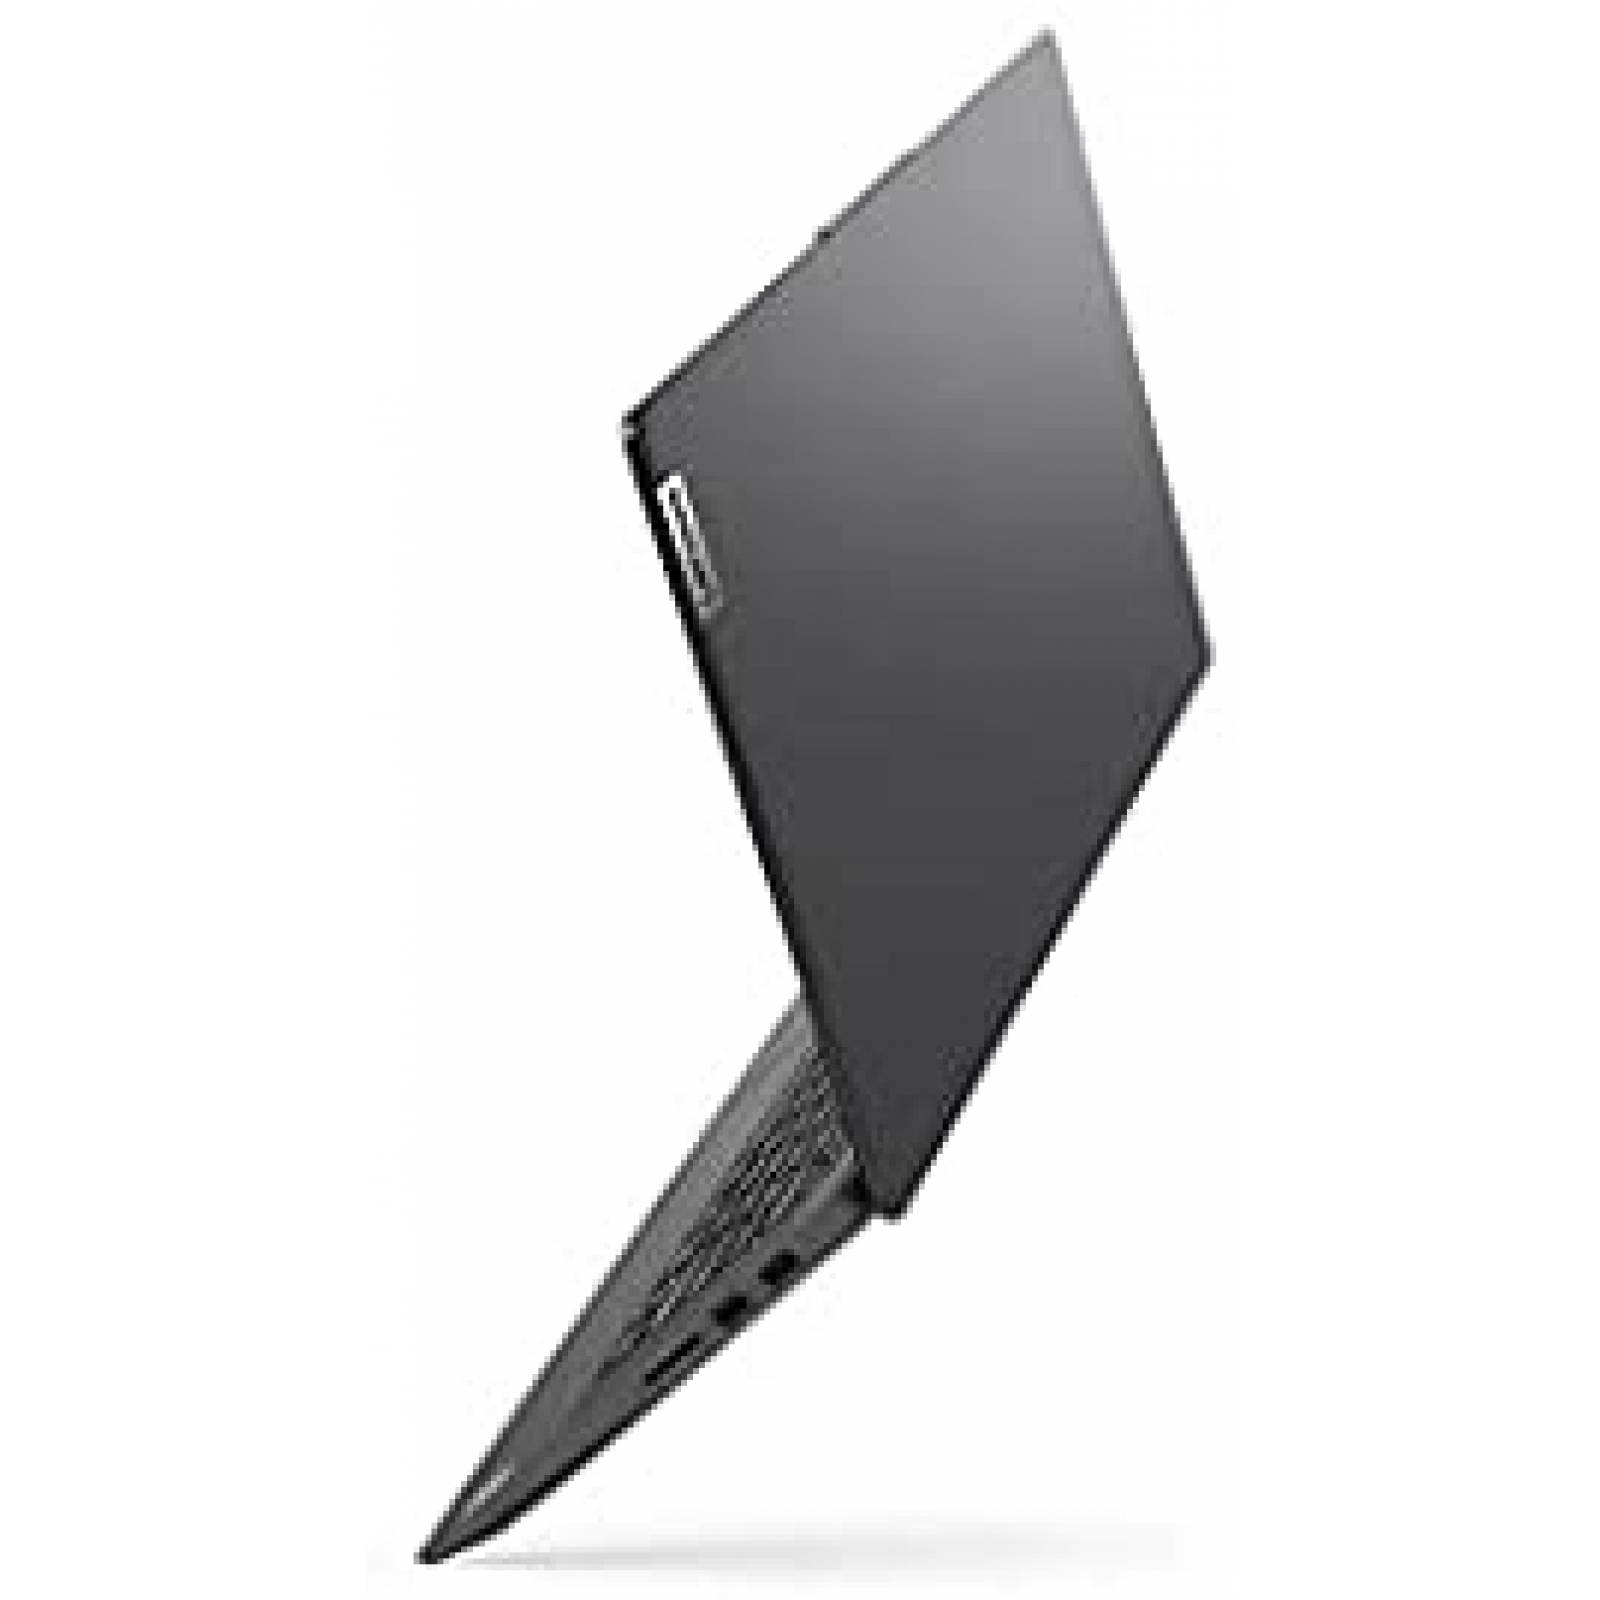 Laptop Lenovo IdeaPad Flex 5 14.0" 4GB 256GB -Negro